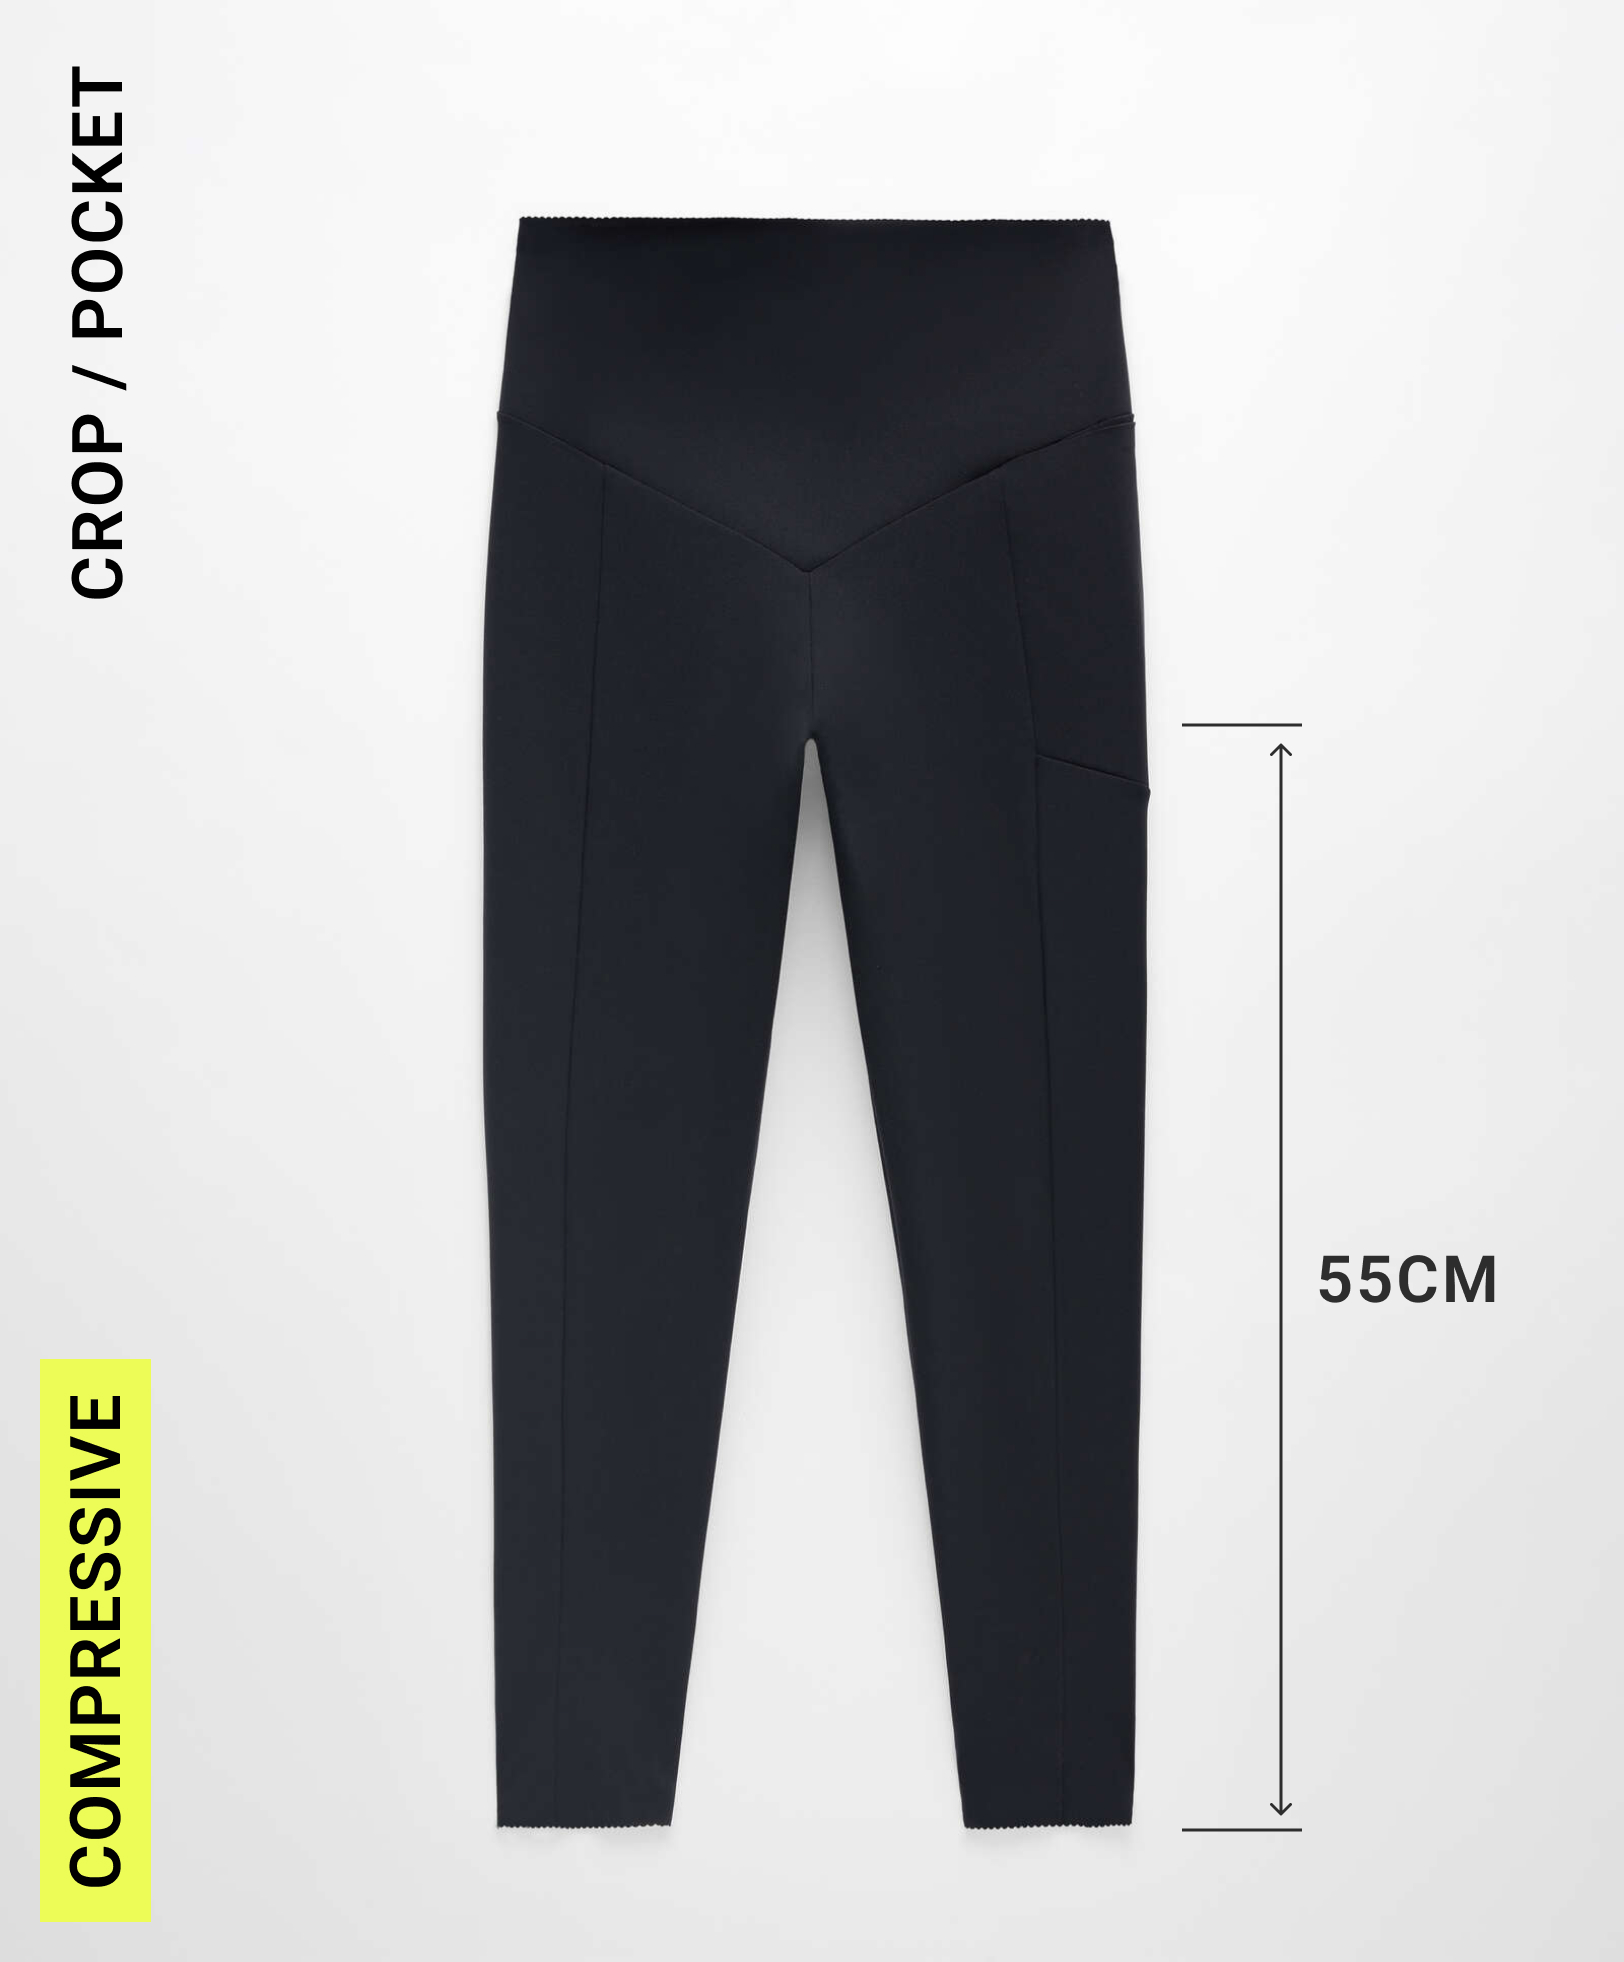 Compressive pocket 55cm crop leggings